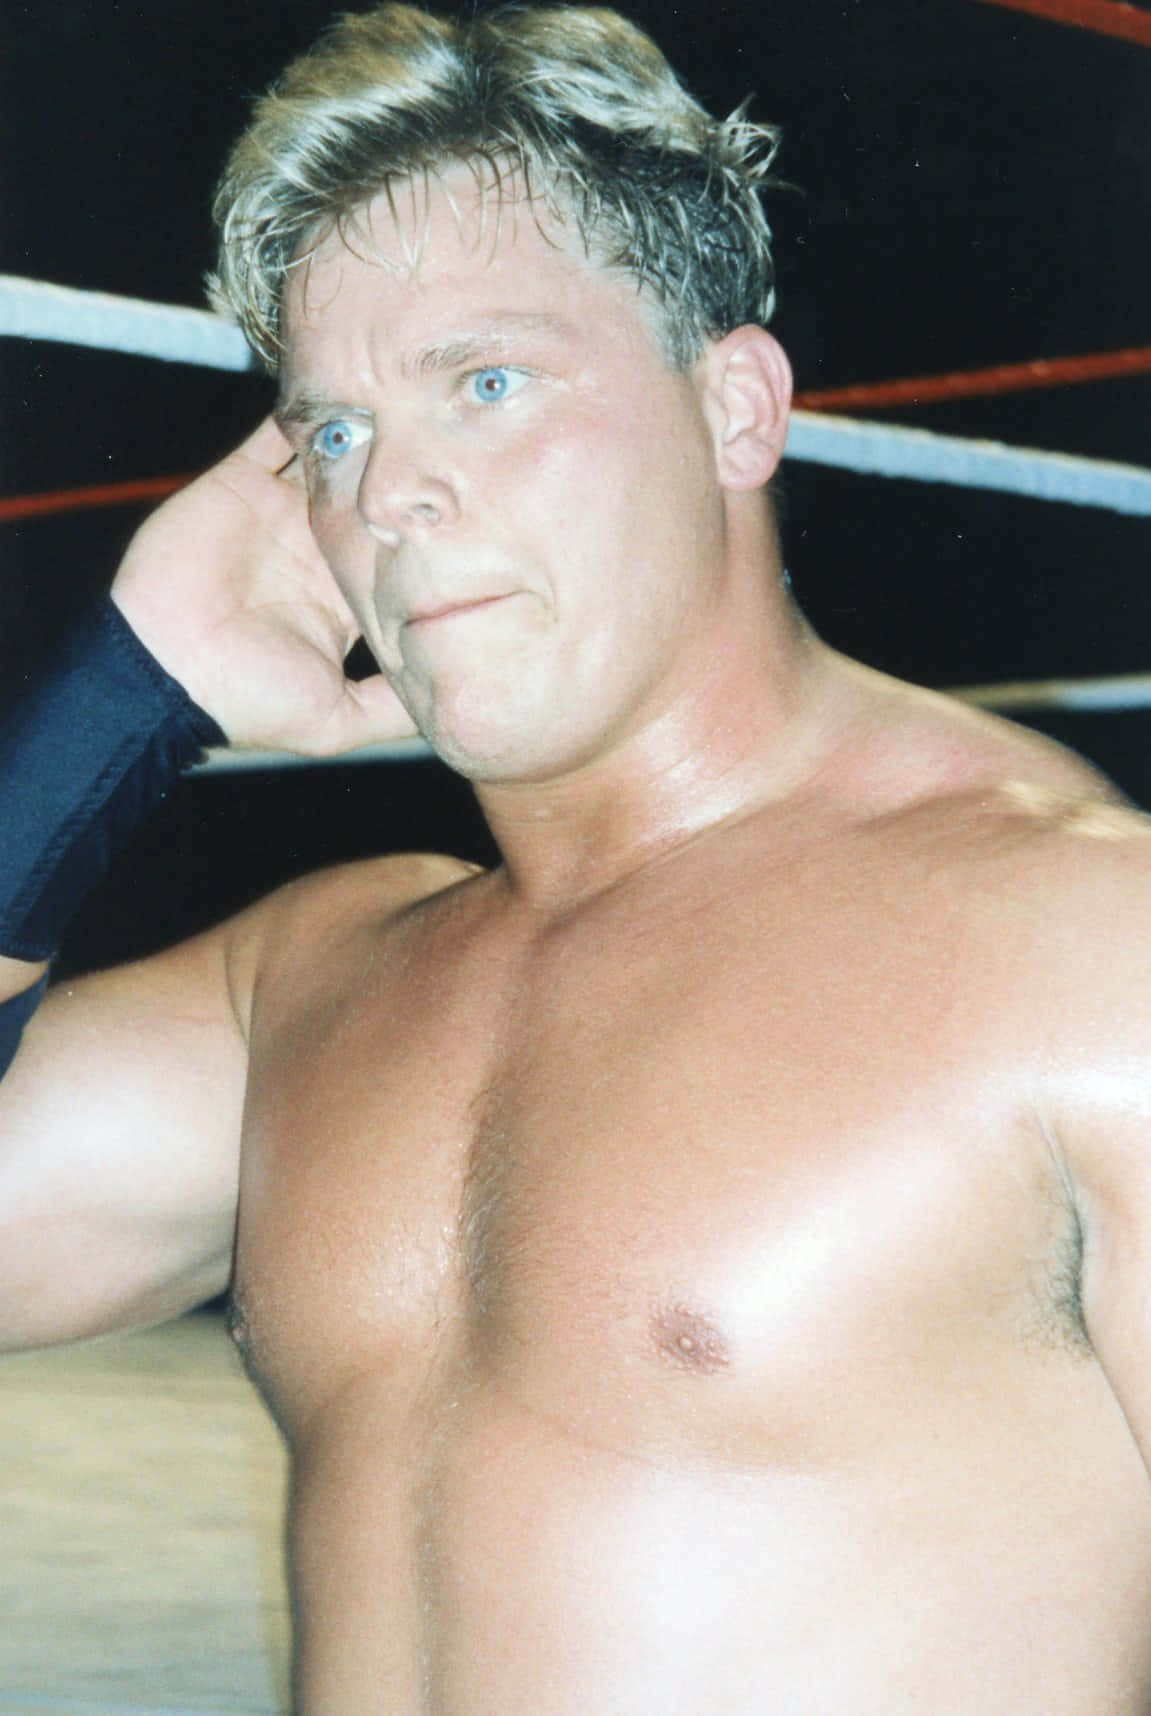 American Professional Wrestler Shane Douglas 1995 Photograph Wallpaper